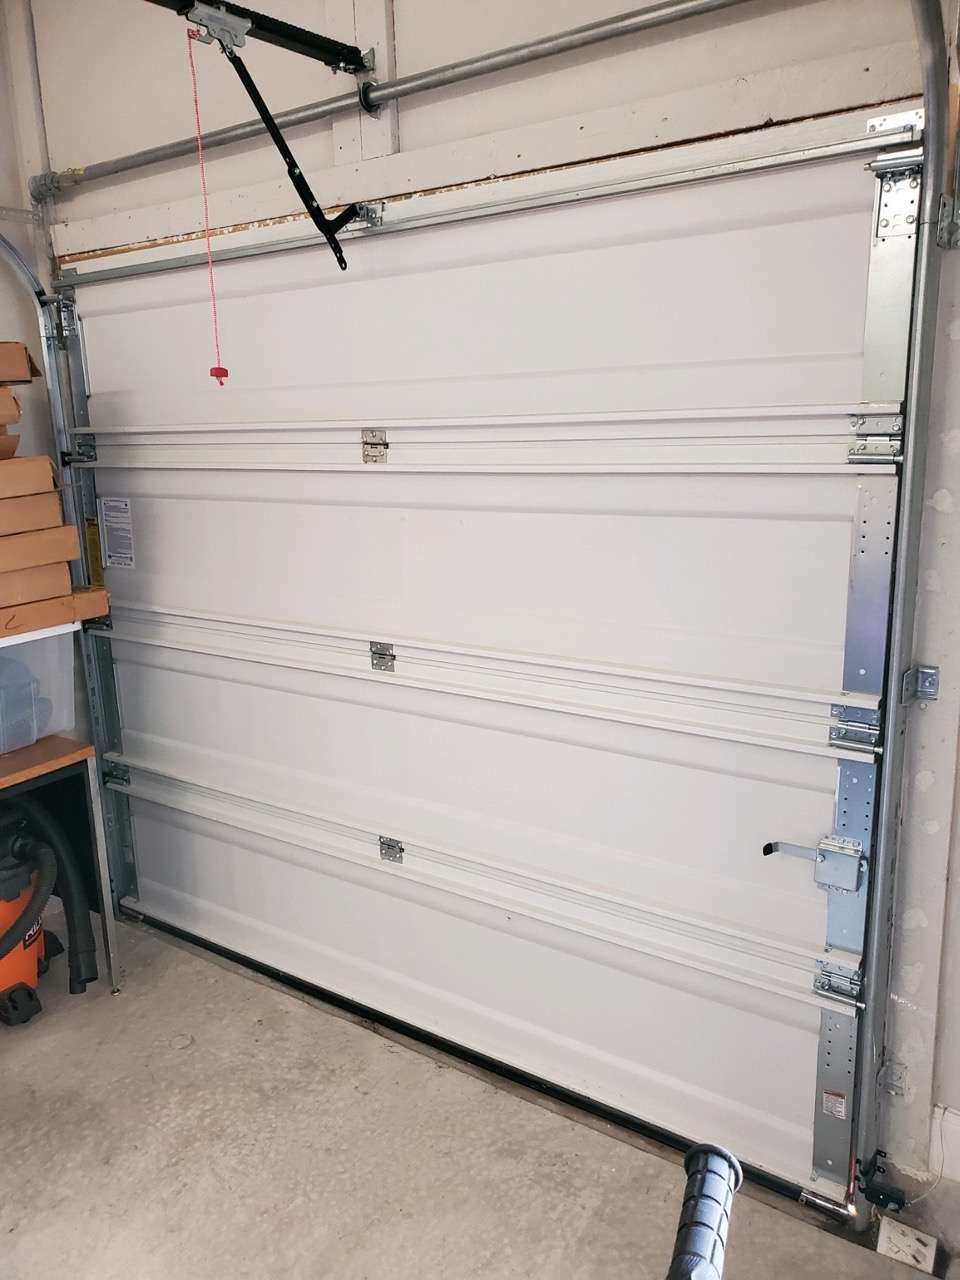 Wayne Dalton insulated 9100 garage door with paper back.